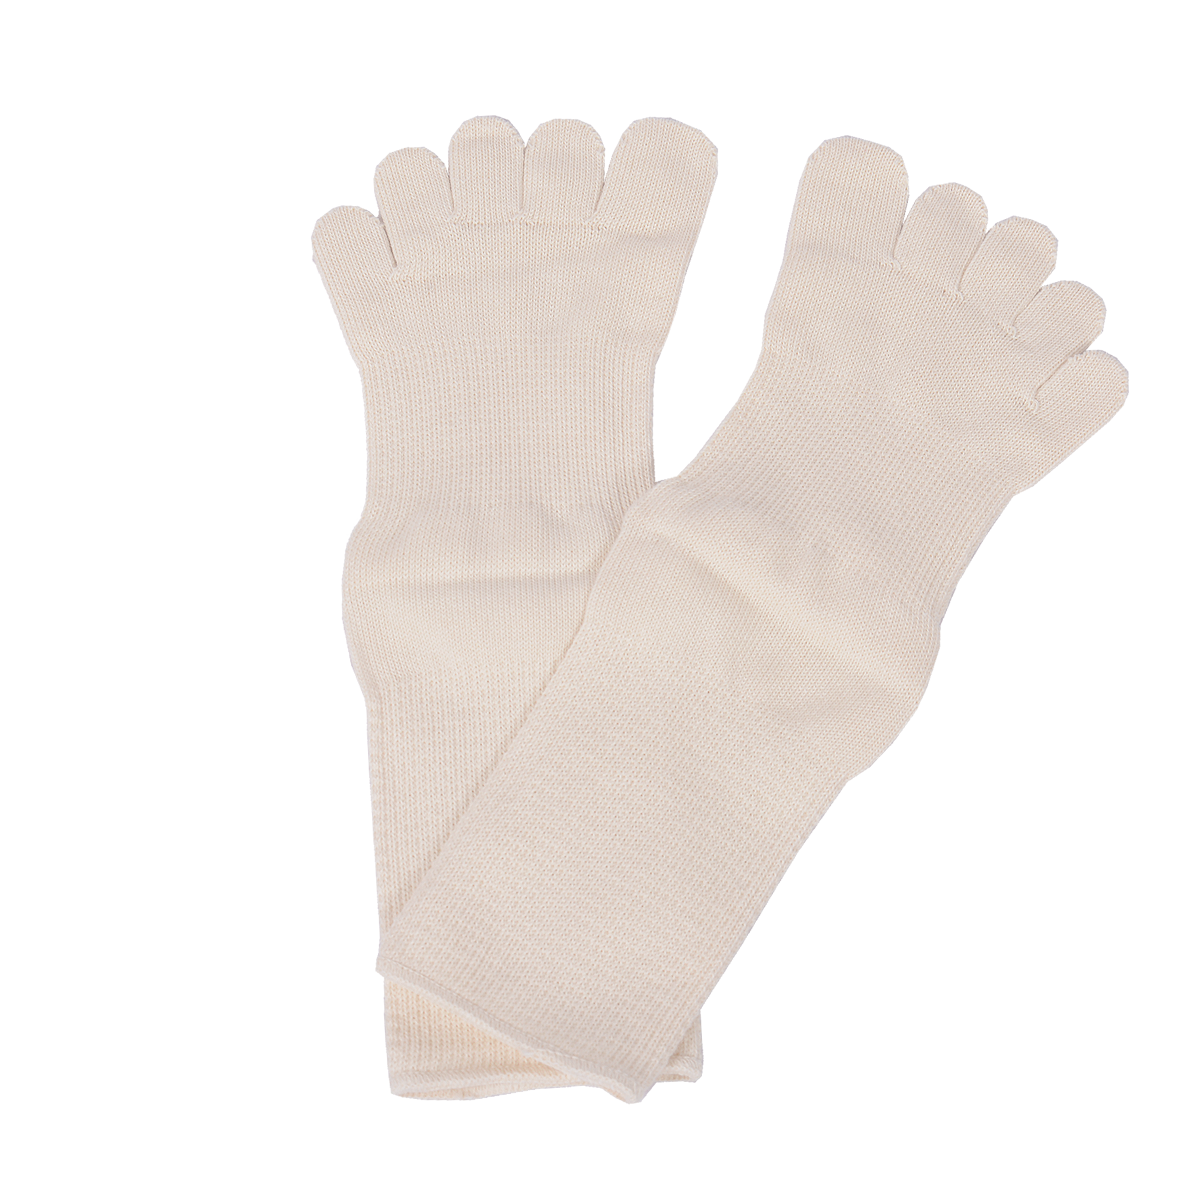 HABITER Women's Toe socks Cotton Lightweight No Kuwait